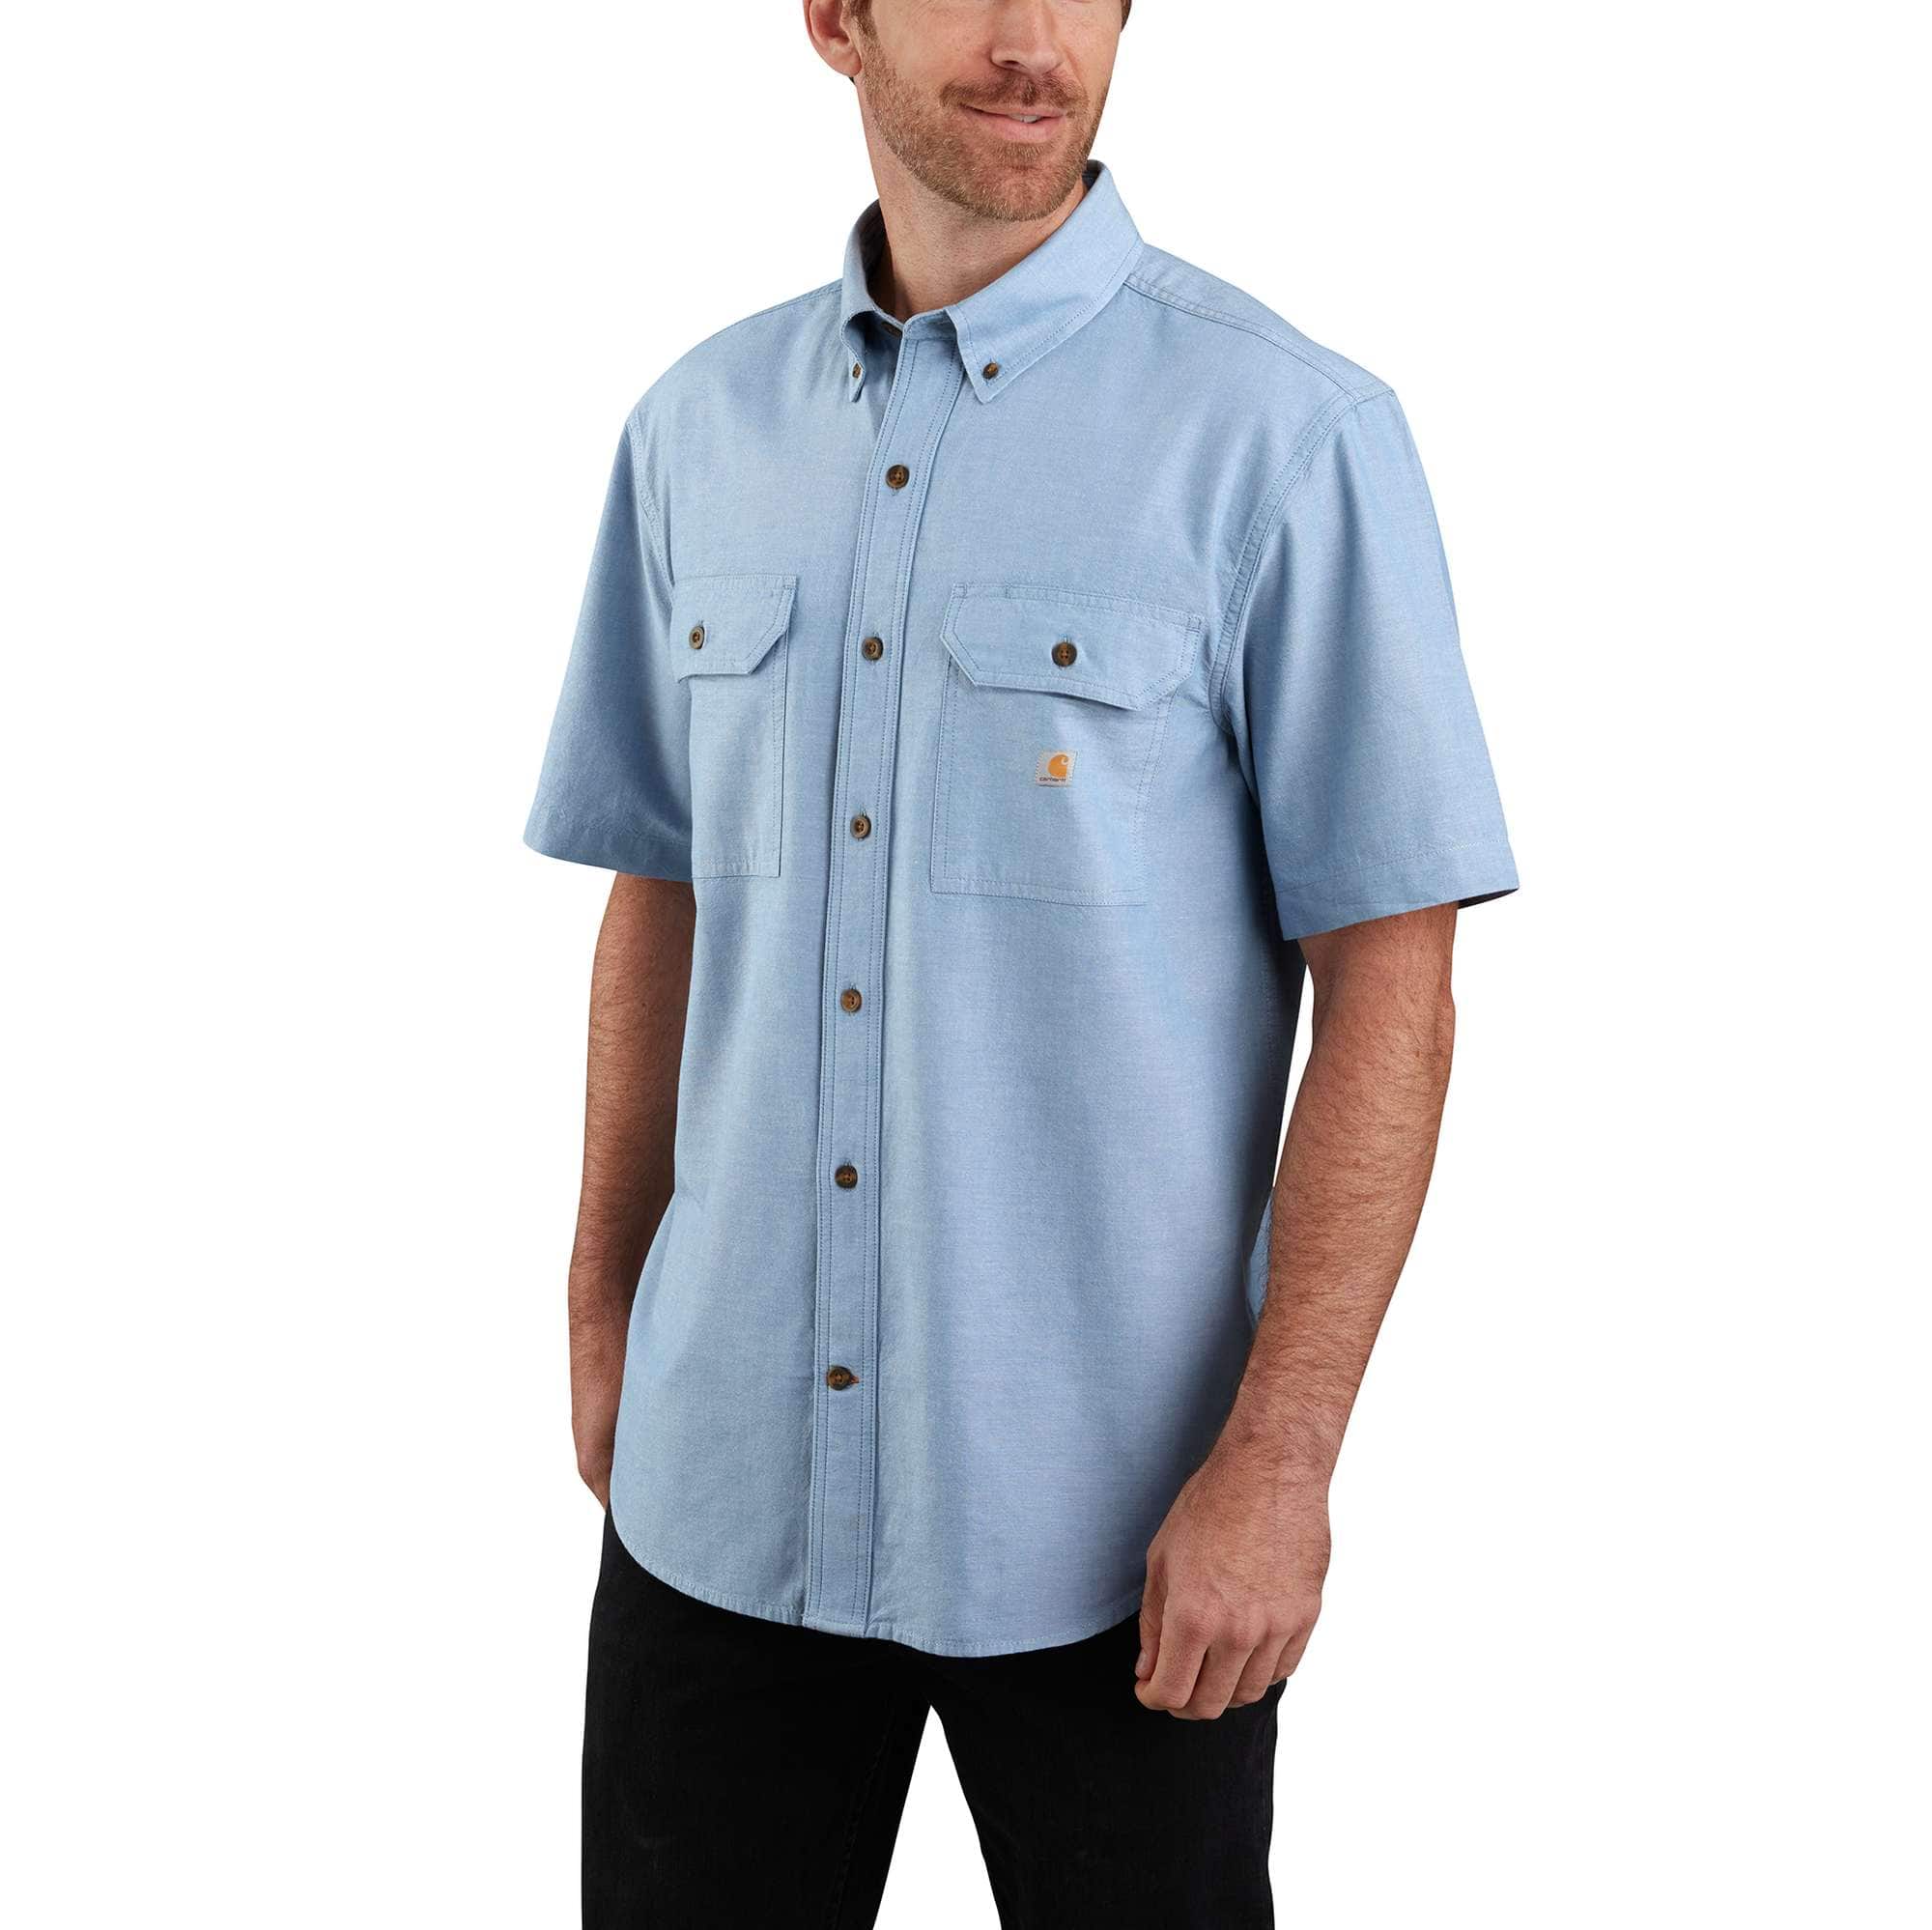 Men's Uniform Shirts | Carhartt Company Gear